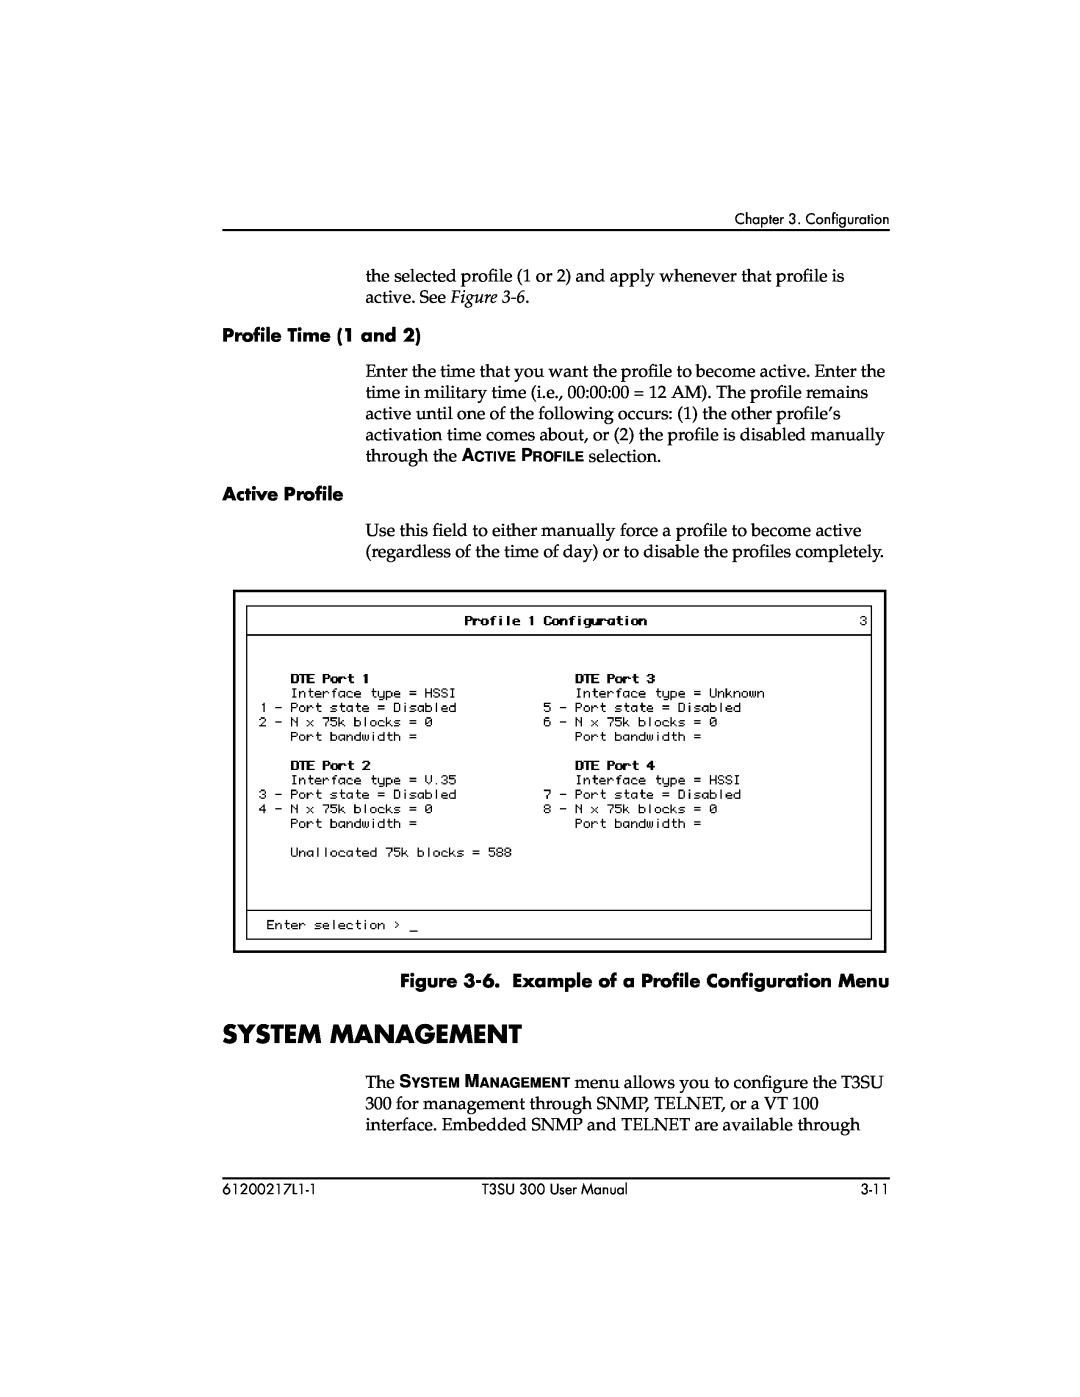 ADTRAN T3SU 300 System Management, Profile Time 1 and, Active Profile, 6. Example of a Profile Configuration Menu 